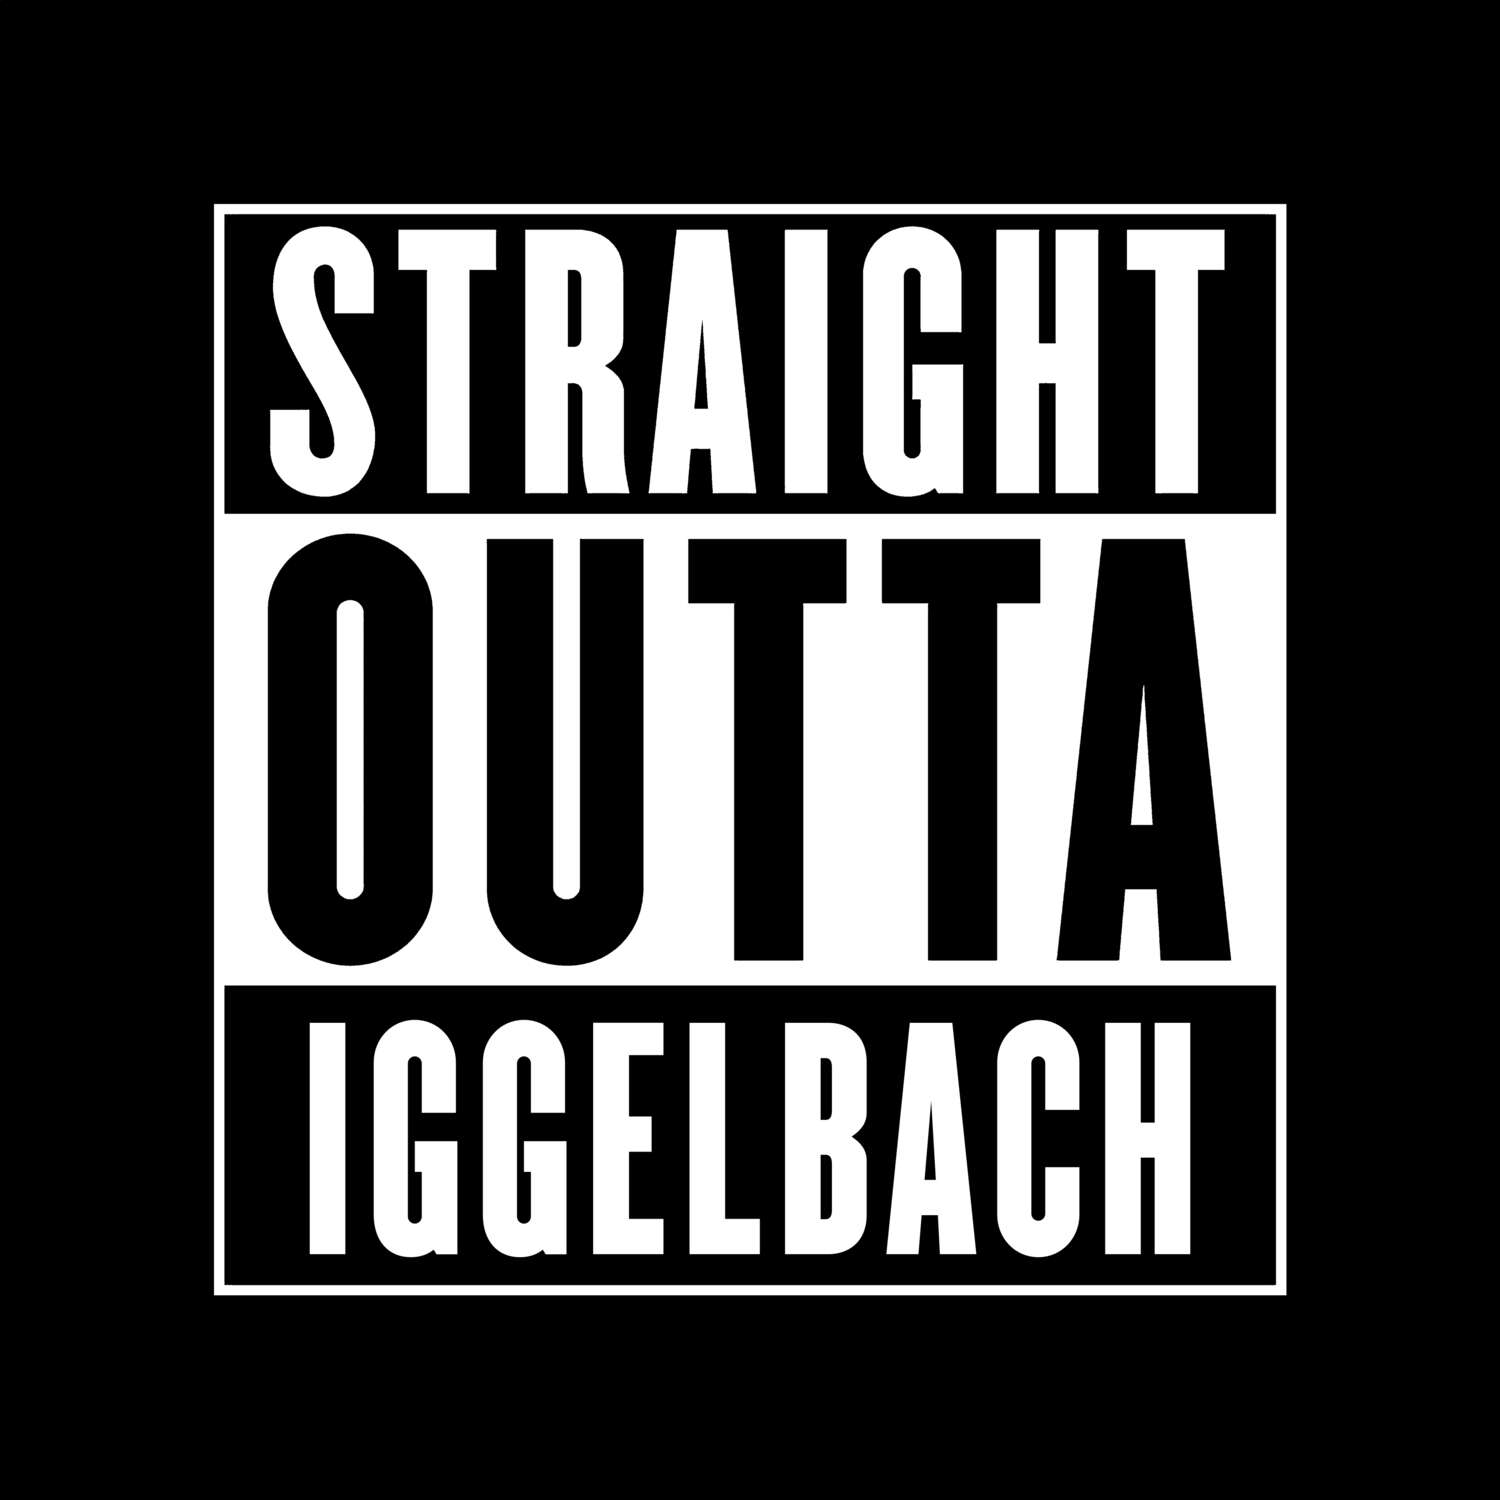 Iggelbach T-Shirt »Straight Outta«